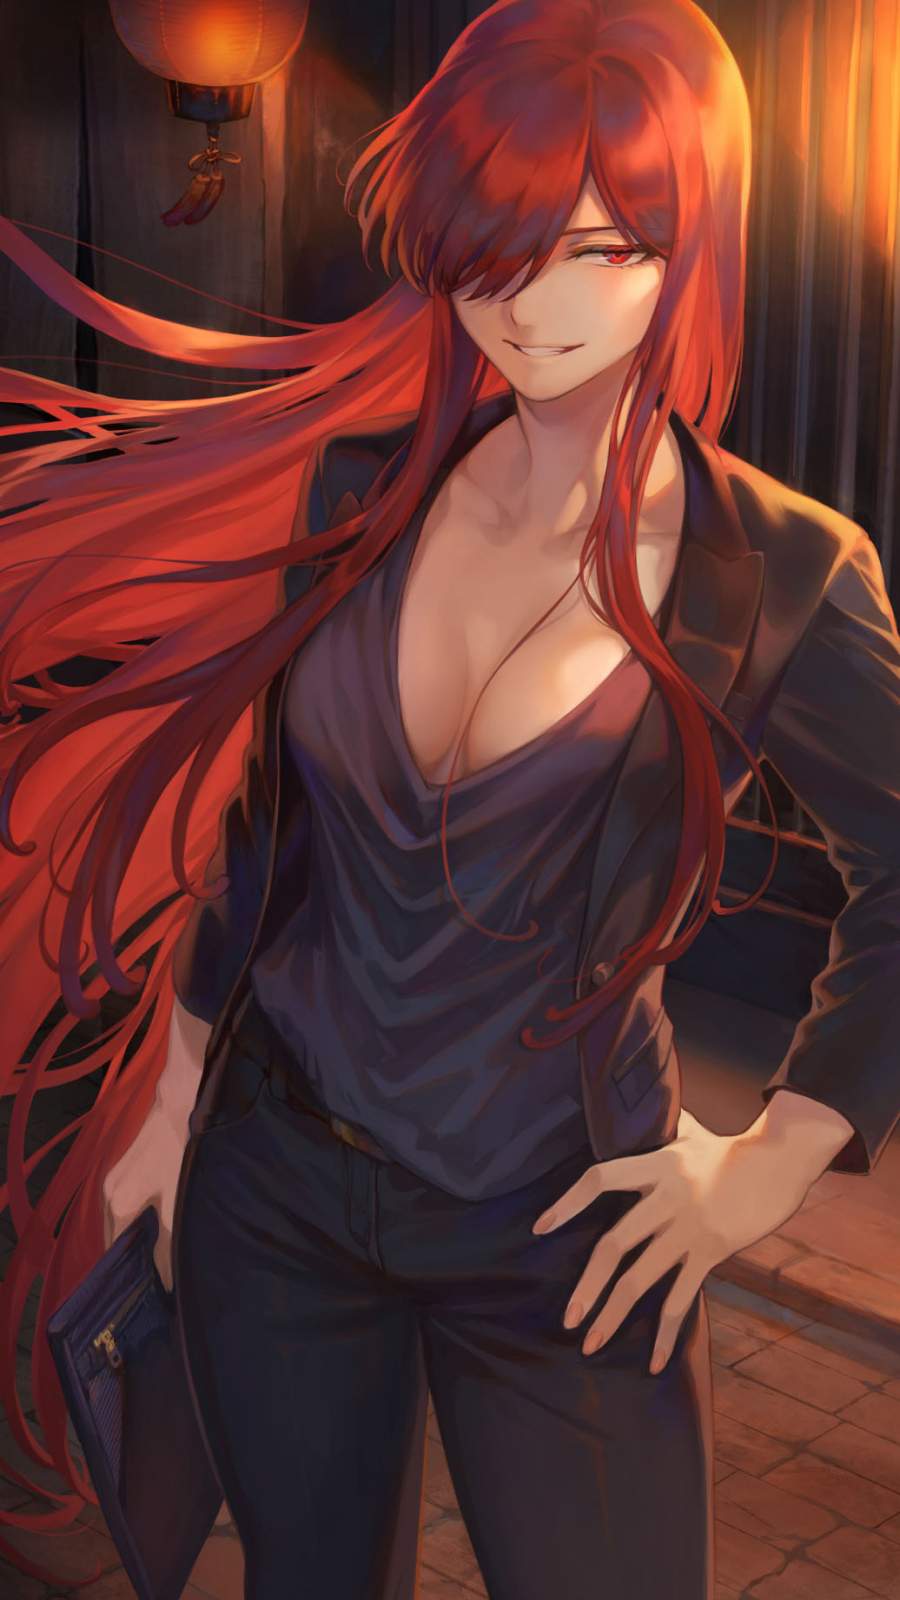 Redhead anime iphone wallpaper